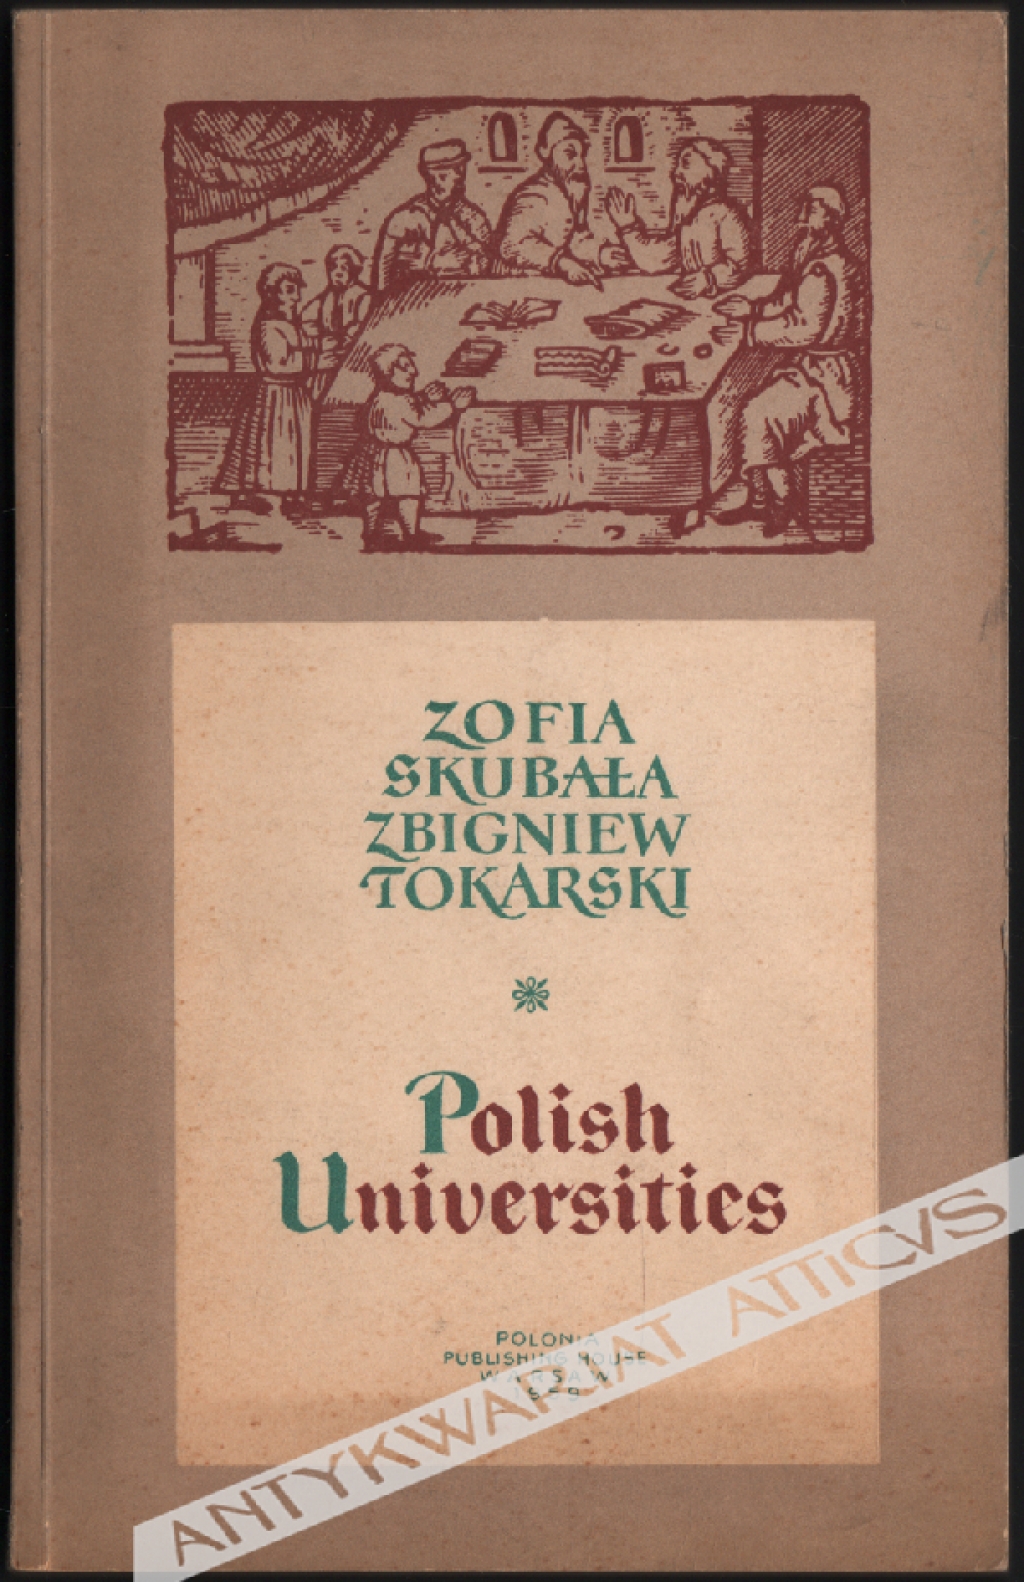 Polish Universities